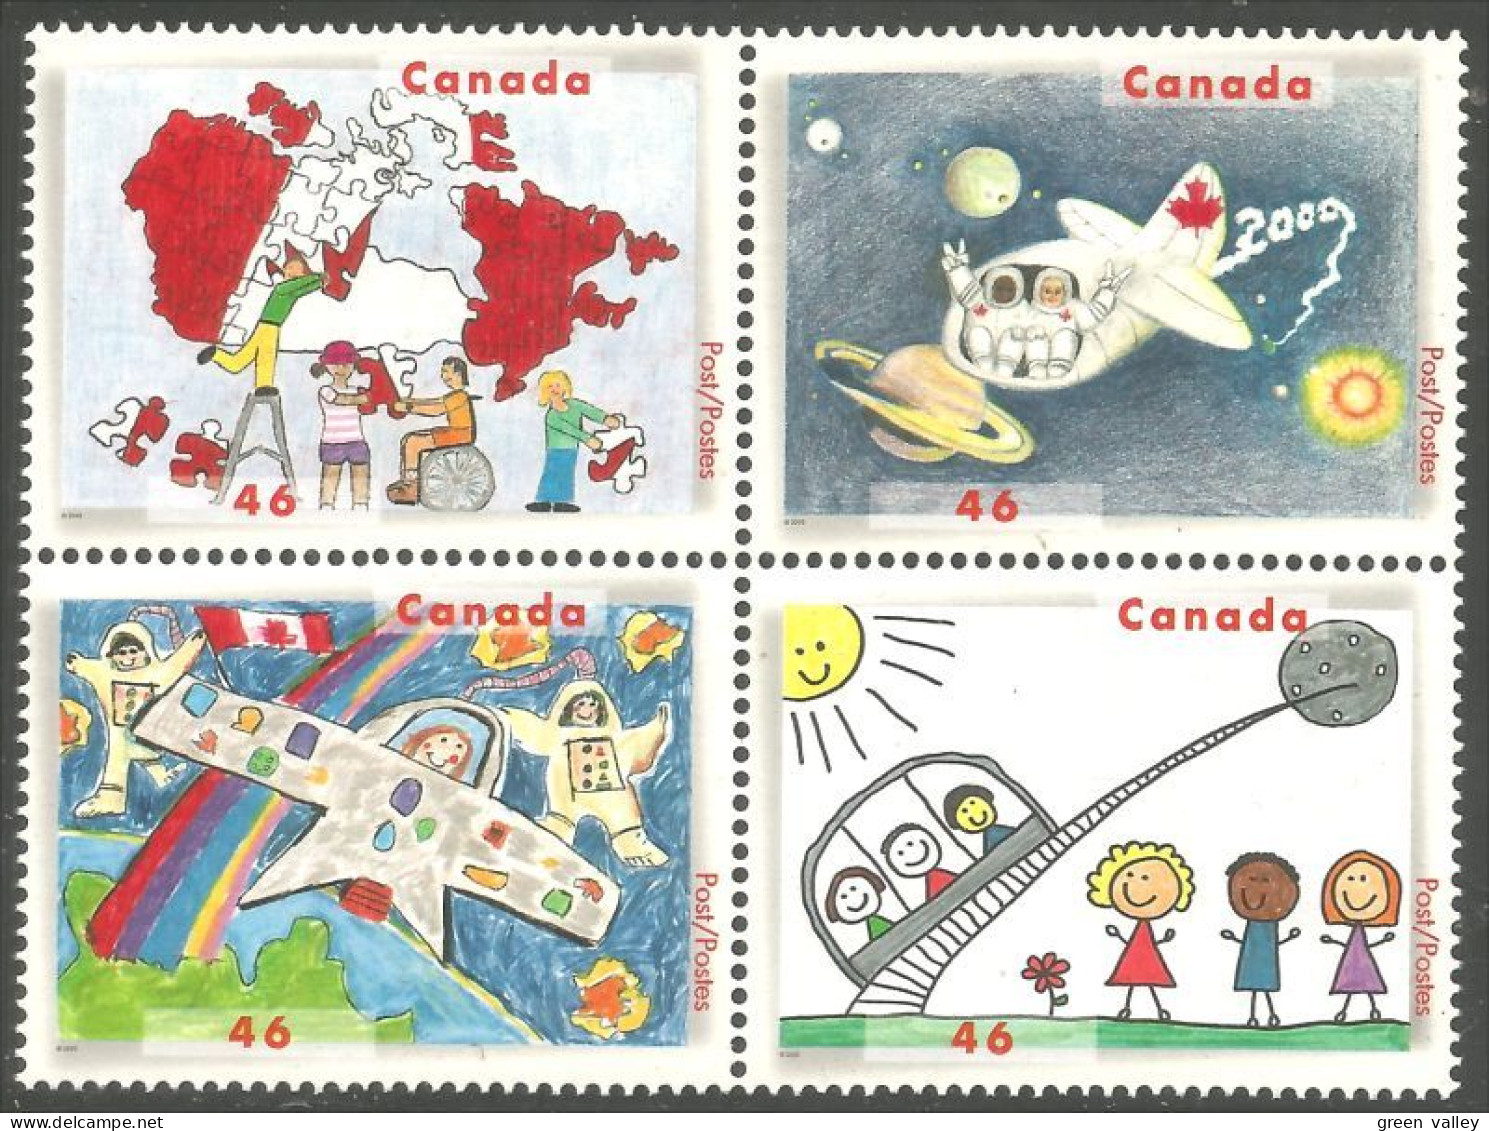 Canada Avion Airplane Dessin Enfants Children Drawings MNH ** Neuf SC (C18-62a) - Neufs